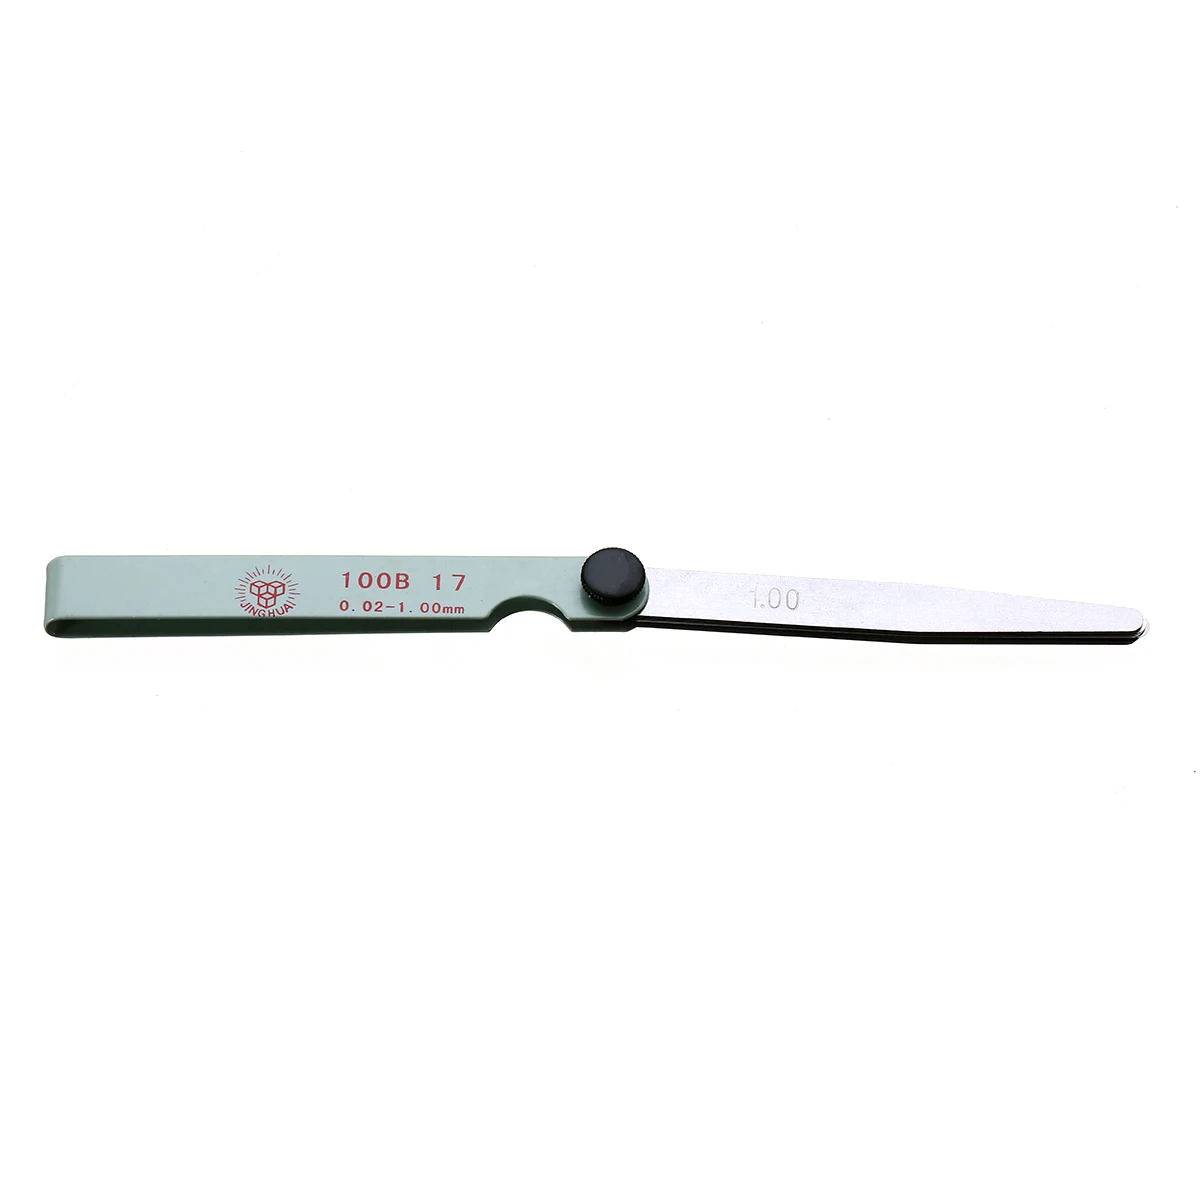 Mayitr 17 Blade Metric Feeler Gauge Gap Filler 0.02-1.00mm Thickness Measurement Layout Tool 100mm